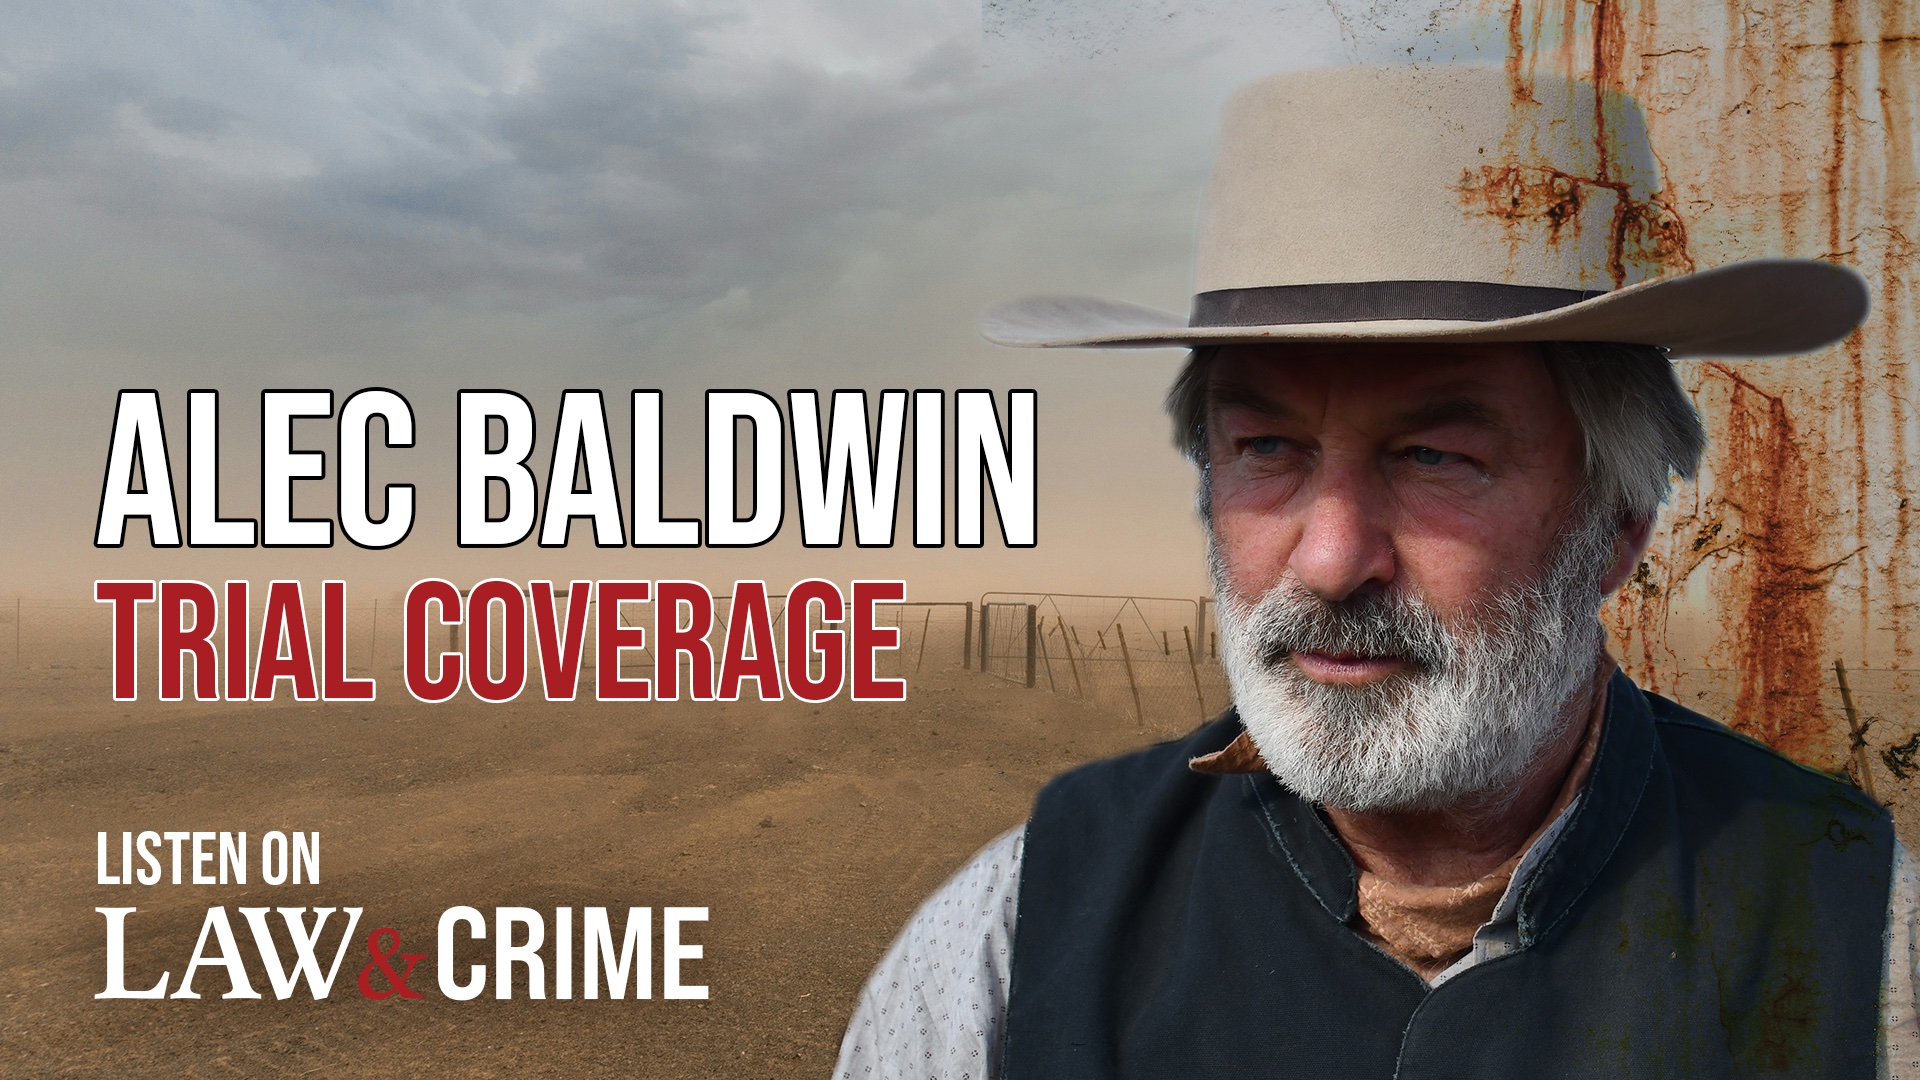 Alec Baldwin Trial on SiriusXM's Law&Crime channel